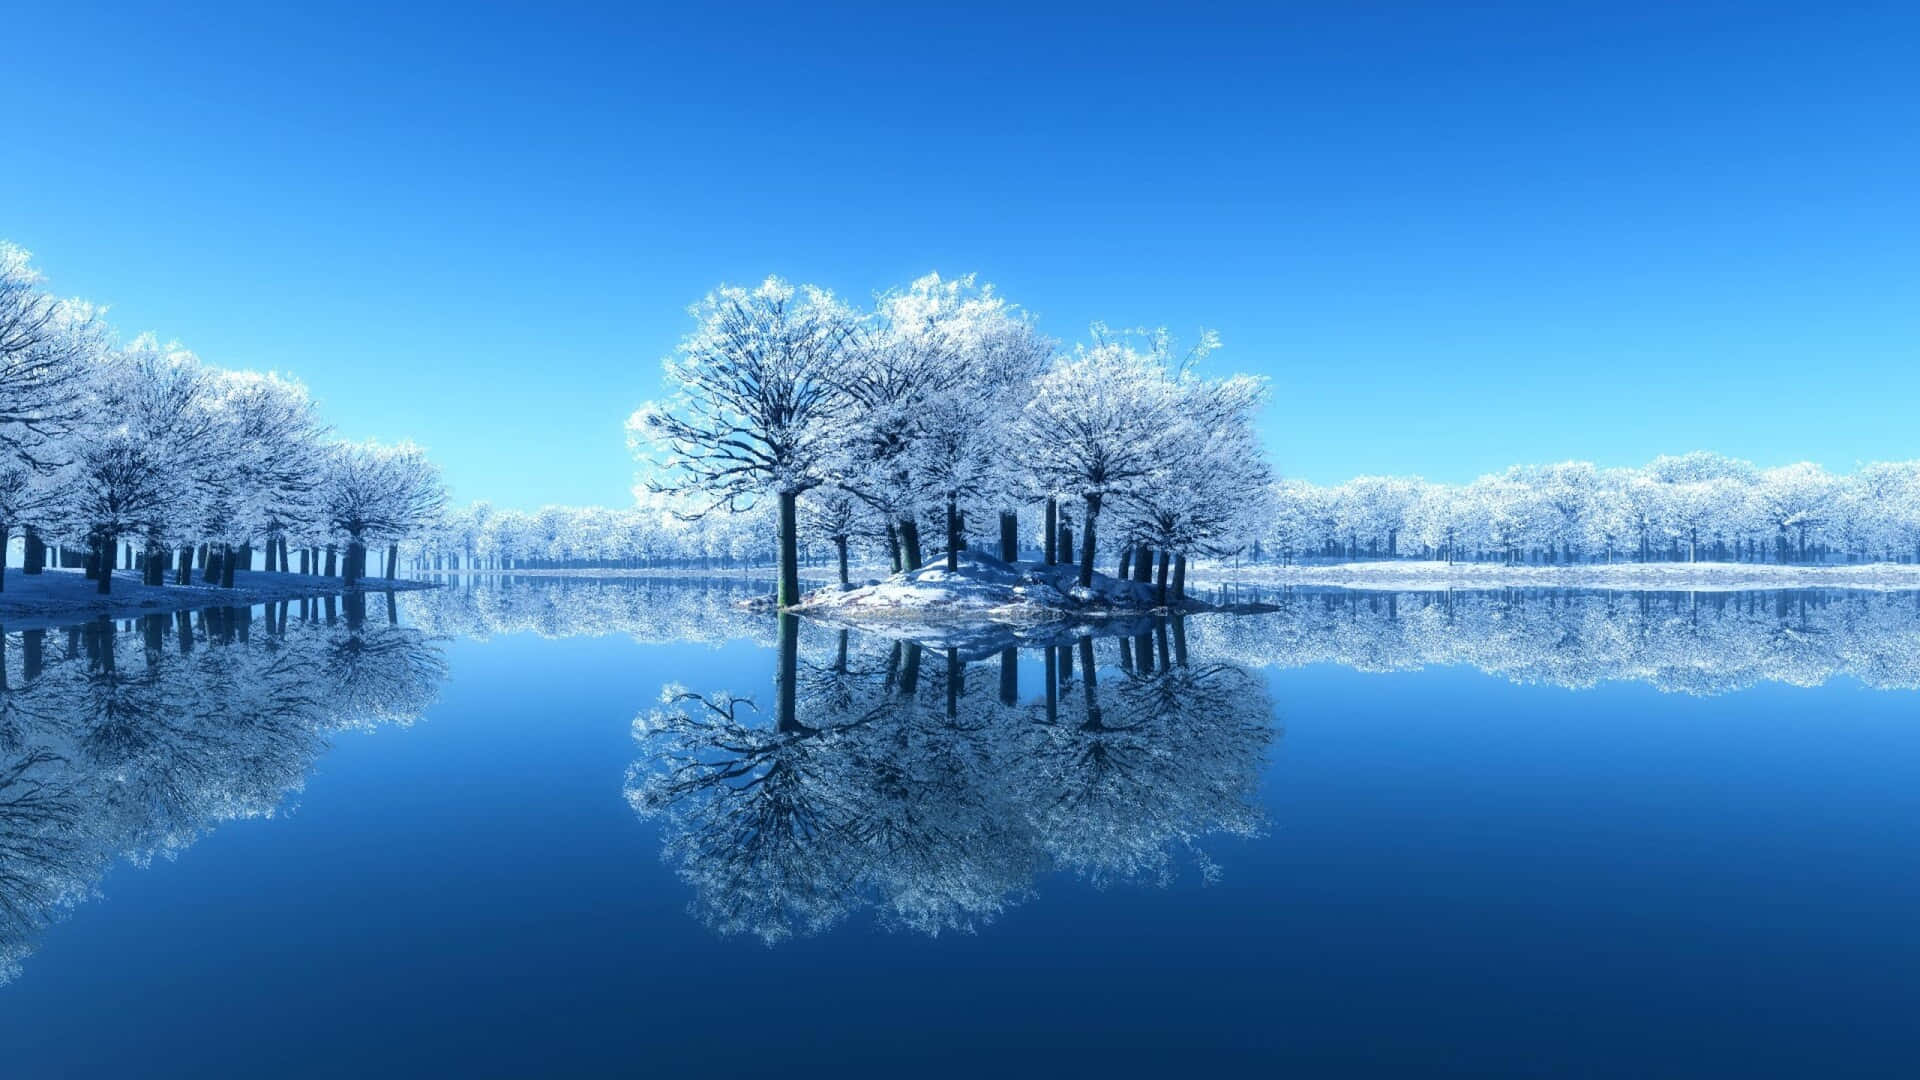 A picturesque landscape of winter